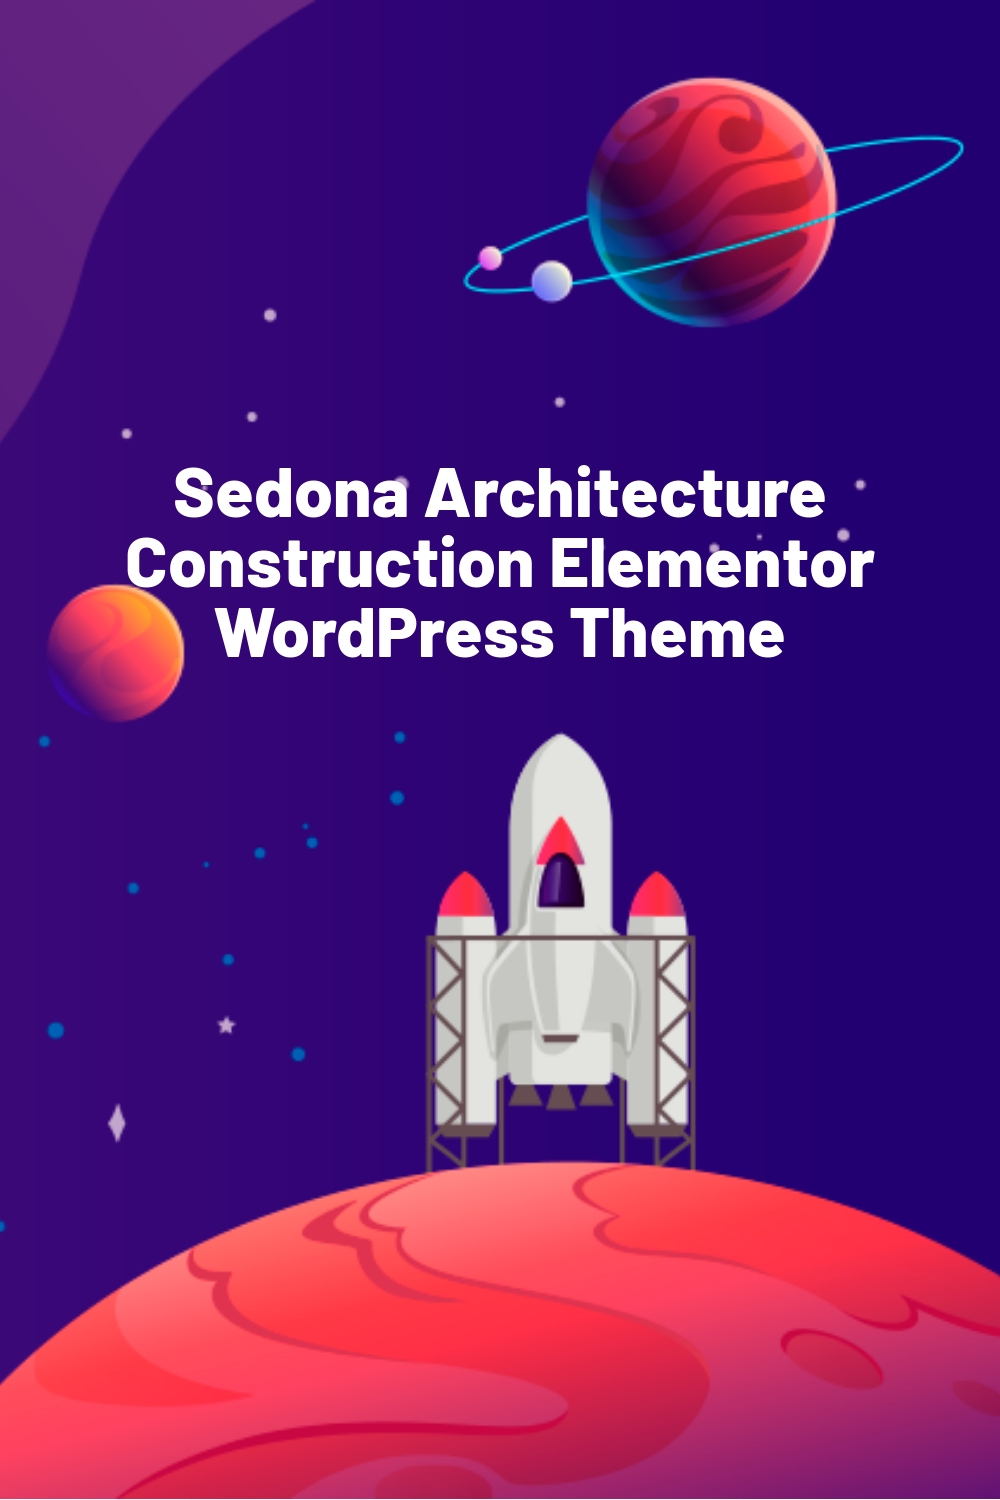 Sedona Architecture Construction Elementor WordPress Theme